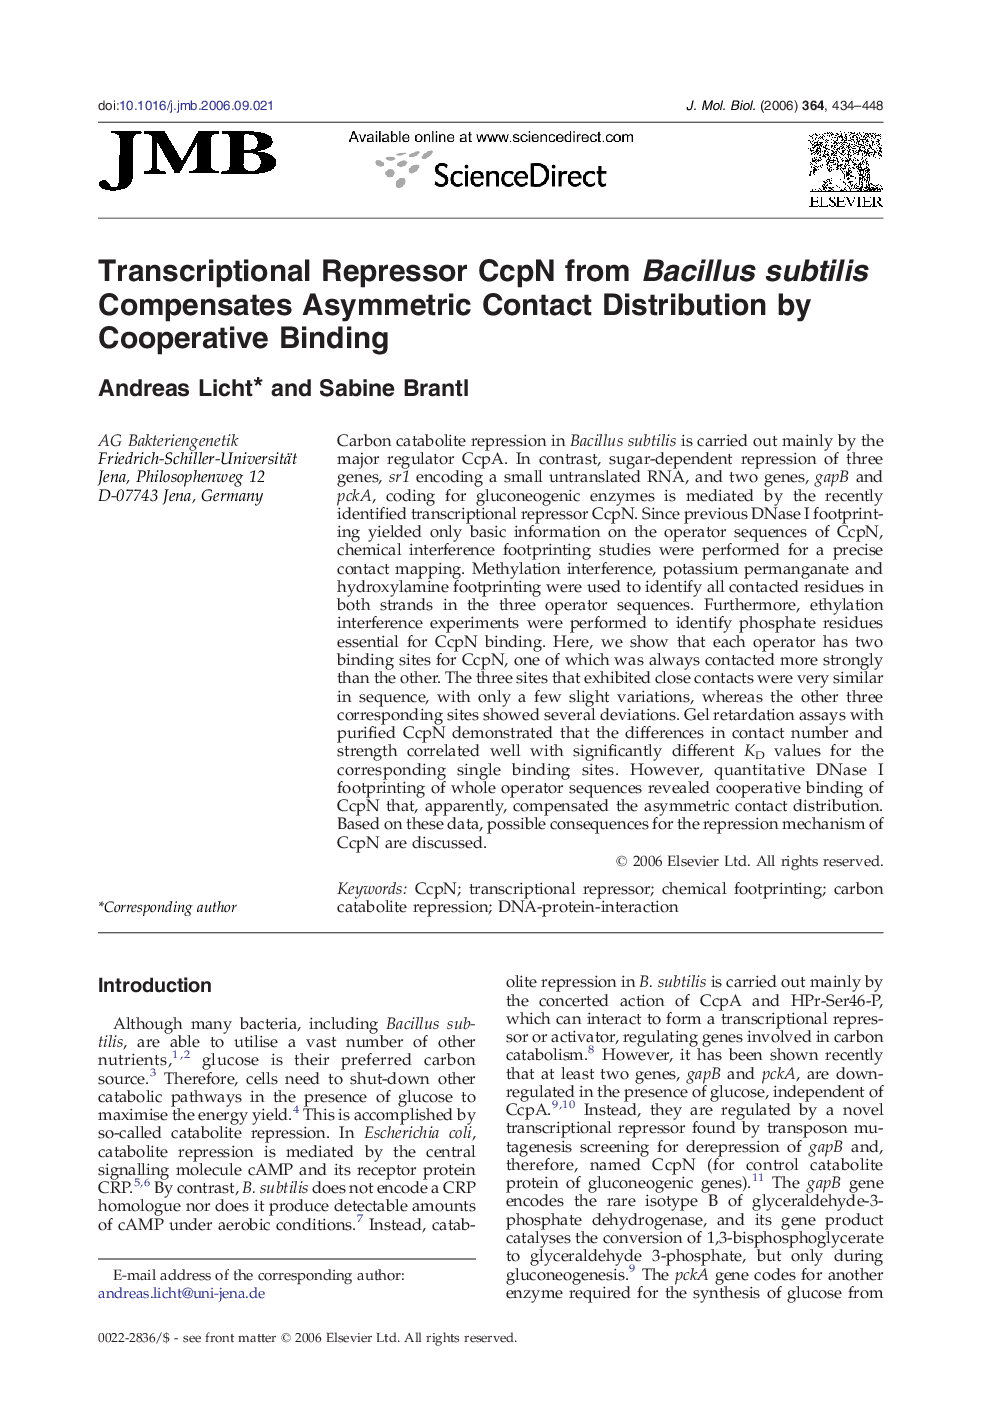 Transcriptional Repressor CcpN from Bacillus subtilis Compensates Asymmetric Contact Distribution by Cooperative Binding